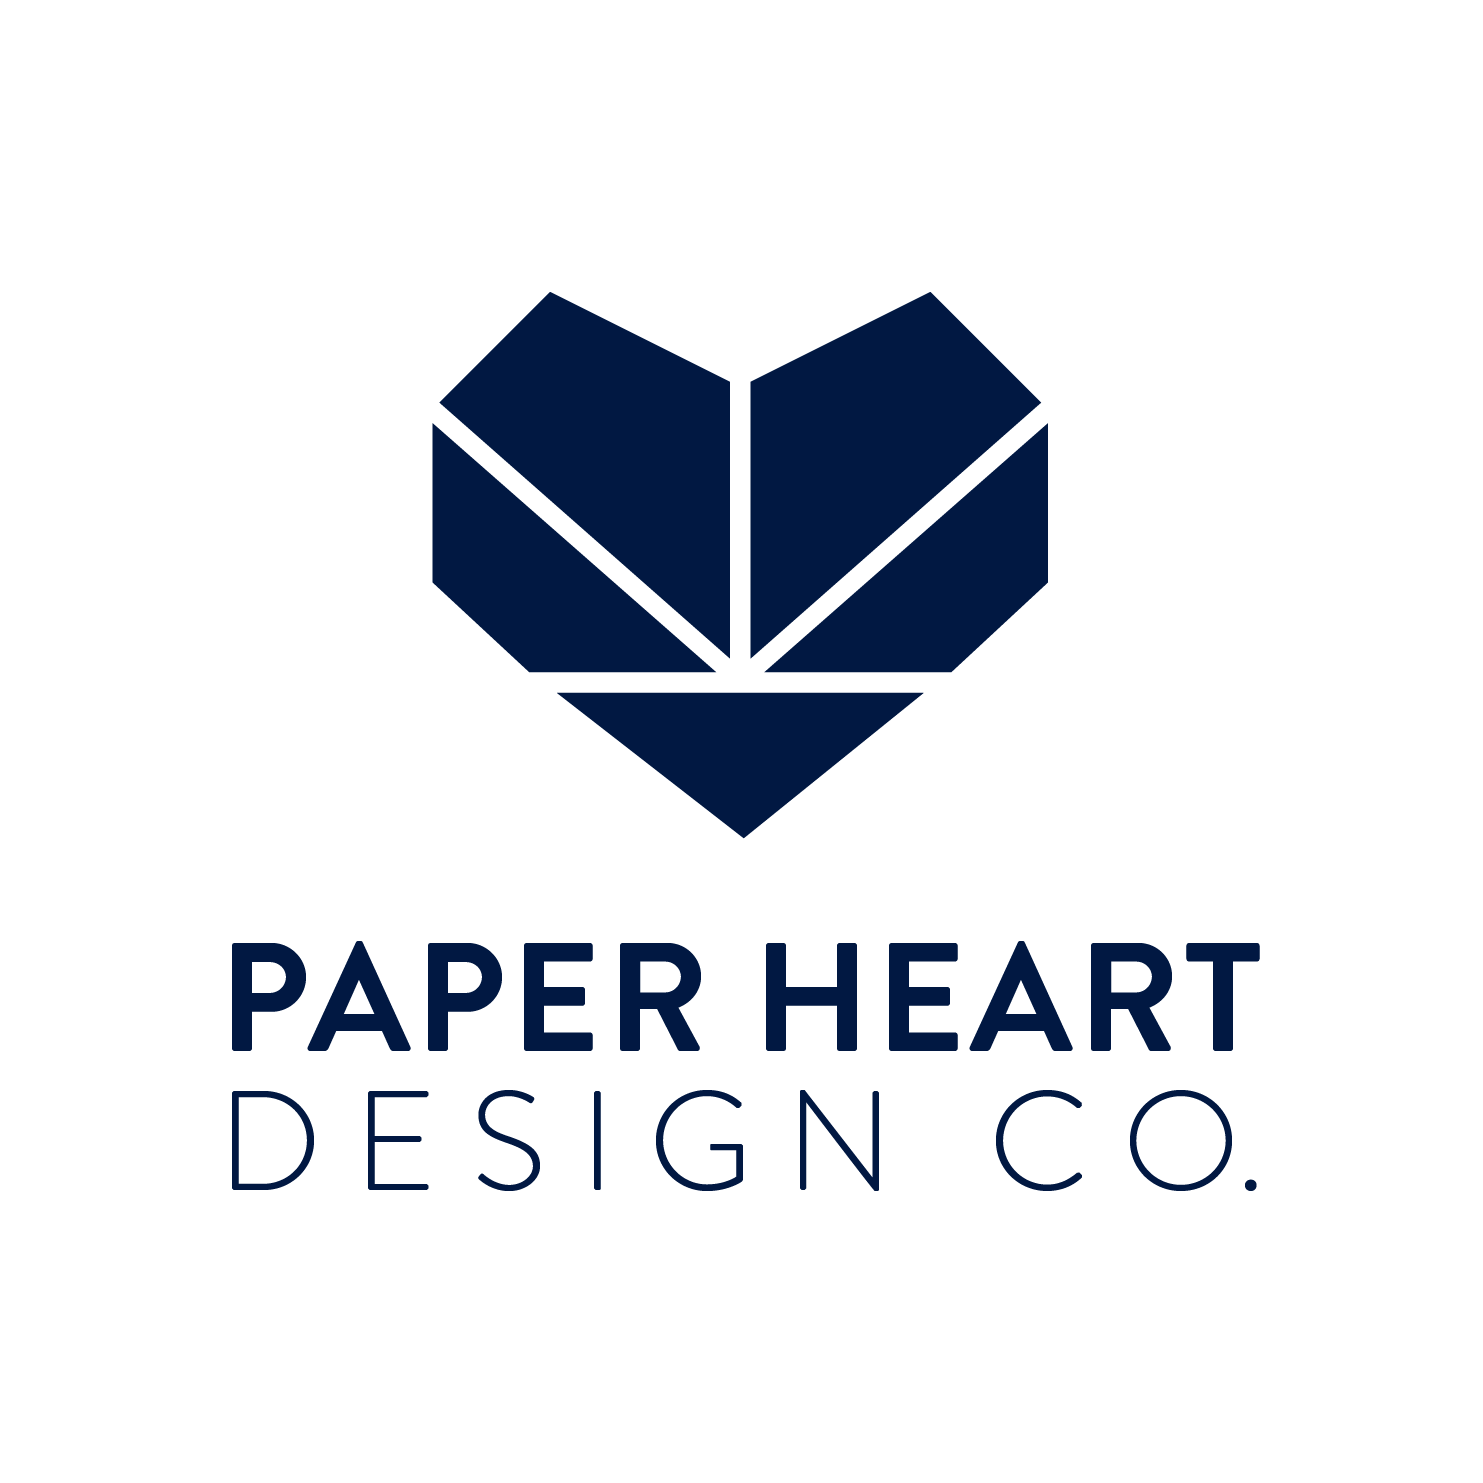 Paper Heart Design Co. (Copy)